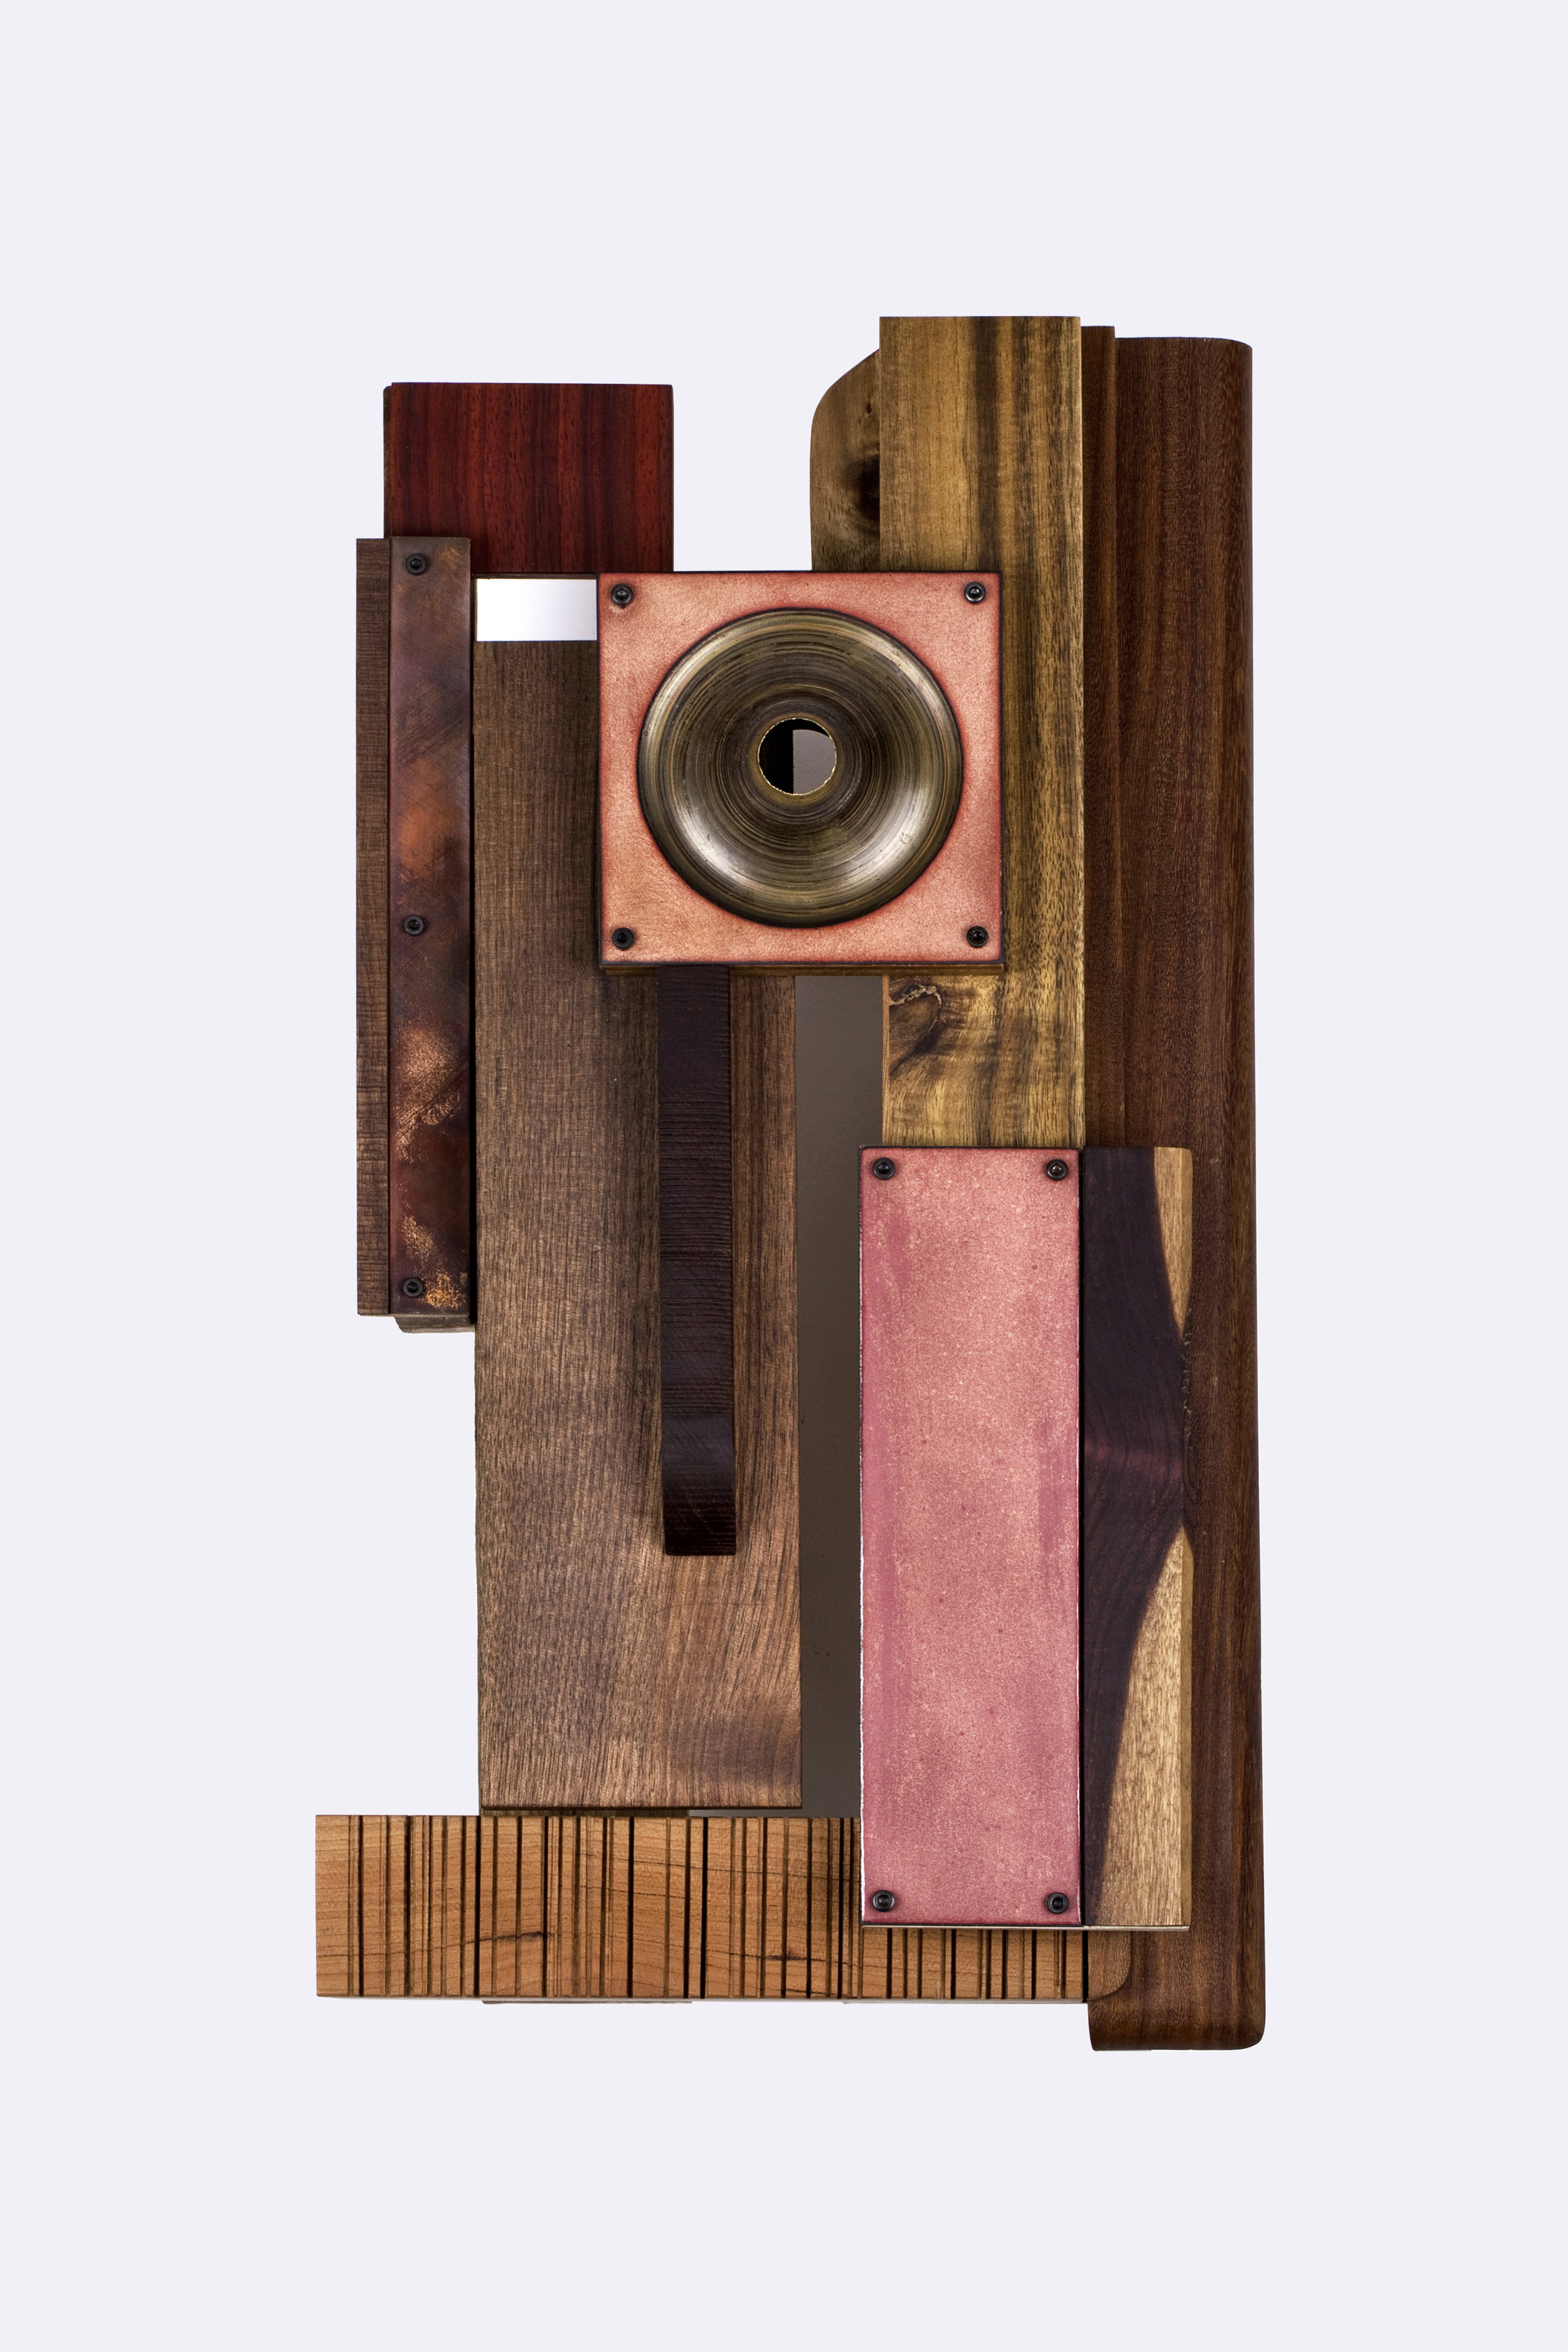   Ydmyk  | Wall sculpture, 2018 | 44x24x10,5cm | Materials: Wood, copper, steel, enamel, found objects.  Photo credit: Aliona Pazdniakova   